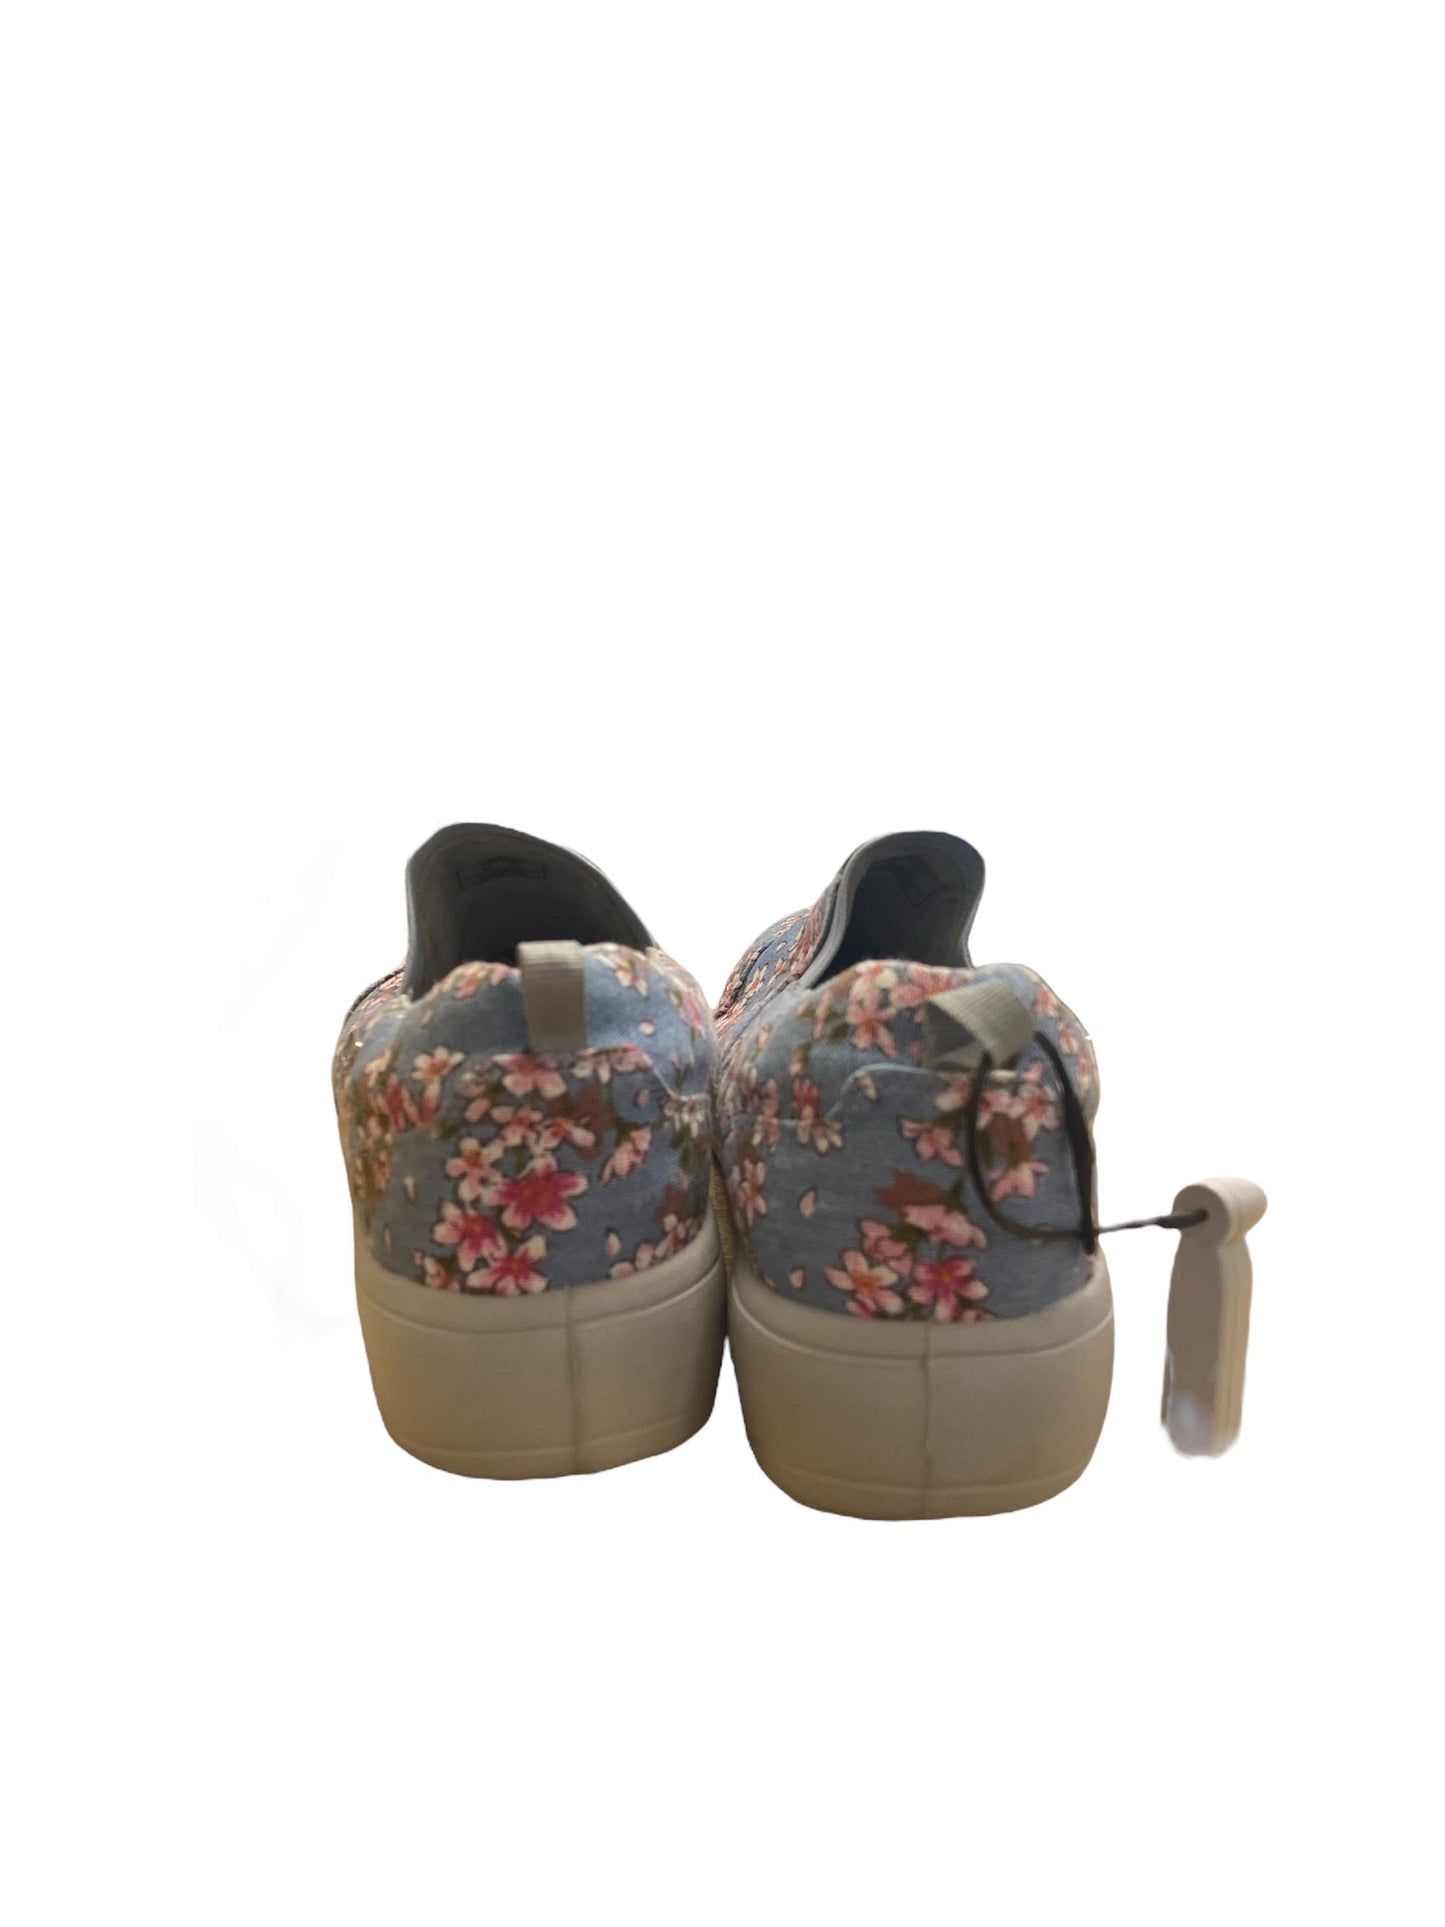 Floral Print Shoes Flats Clothes Mentor, Size 7.5